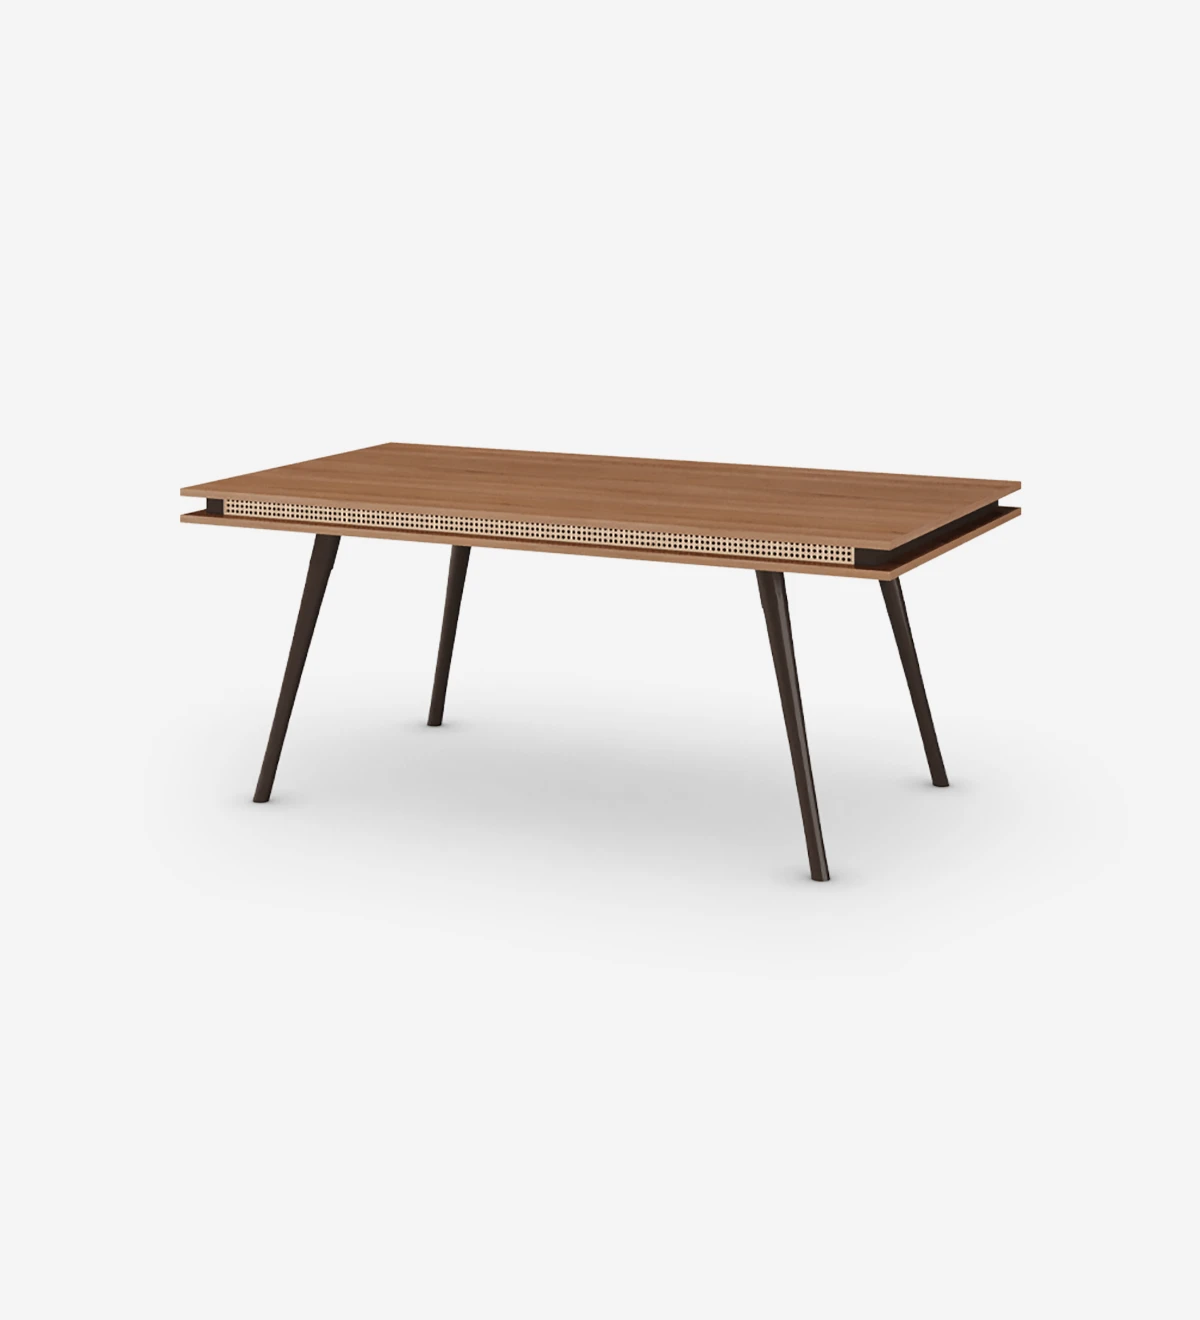 Malmo rectangular dining table 180 x 100 cm, walnut top, dark brown lacquered feet.